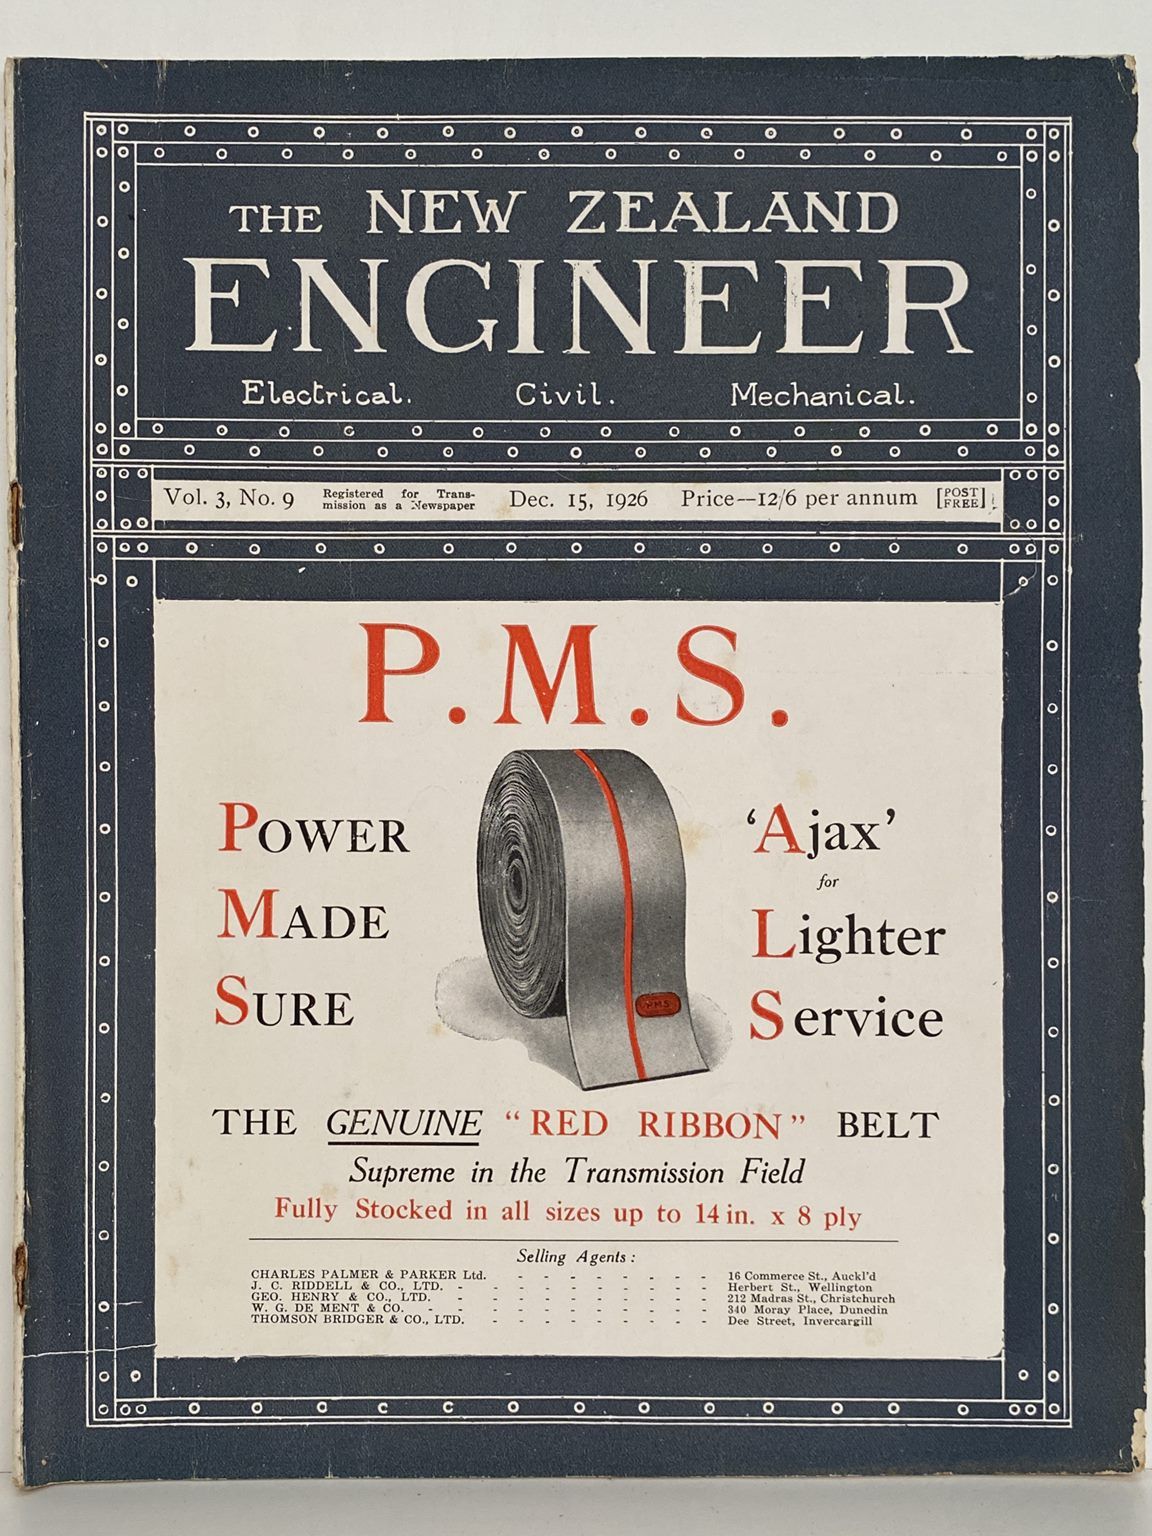 OLD MAGAZINE: The New Zealand Engineer Vol. 3, No. 8 - 15 November 1926